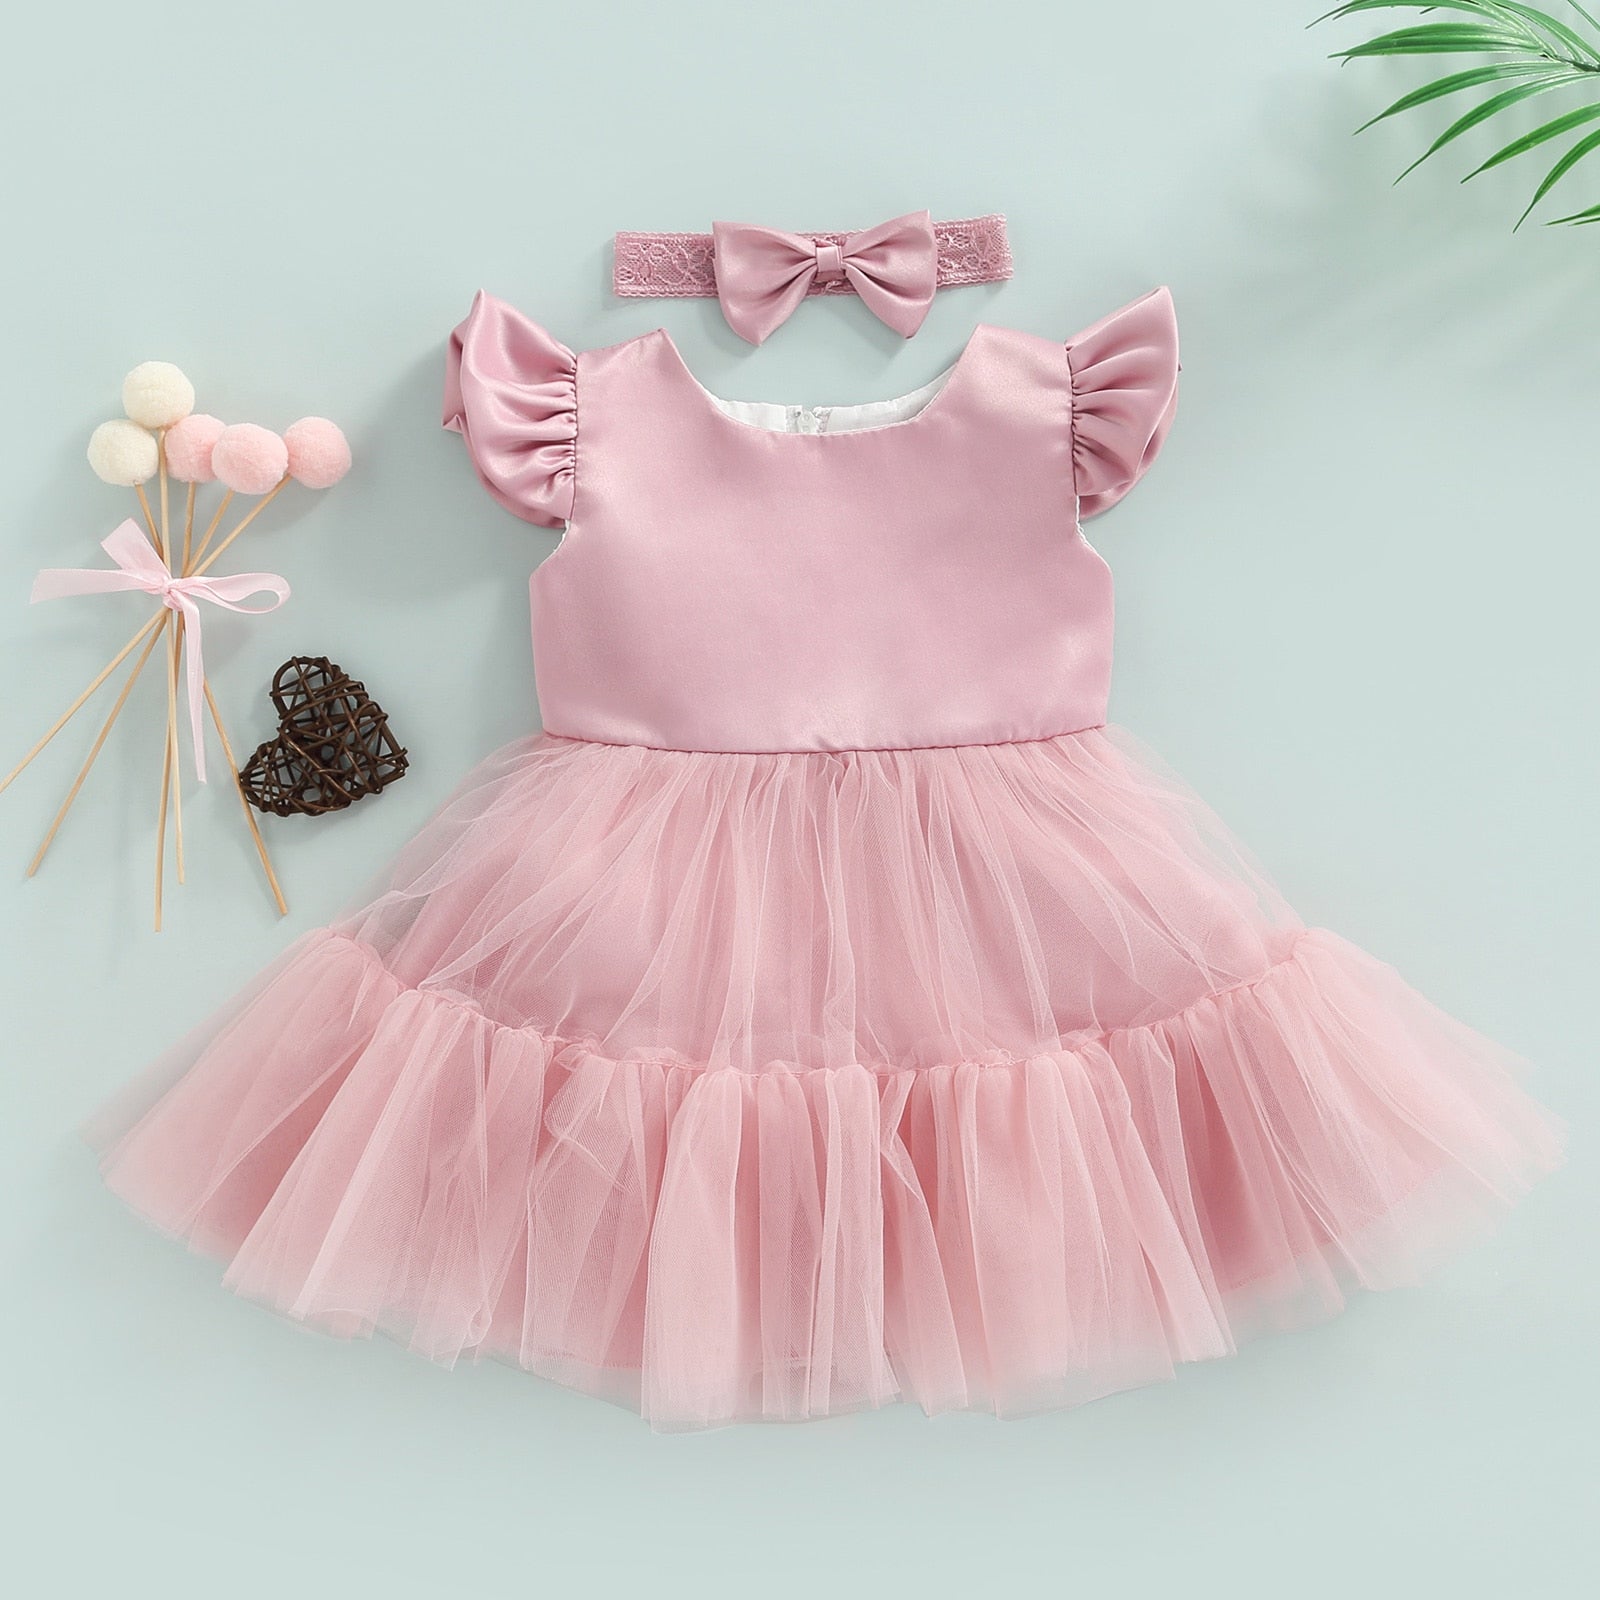 Vestido Infantil + Lacinho Tule vestido Loja Click Certo Rosa 2-3 anos 57cm 